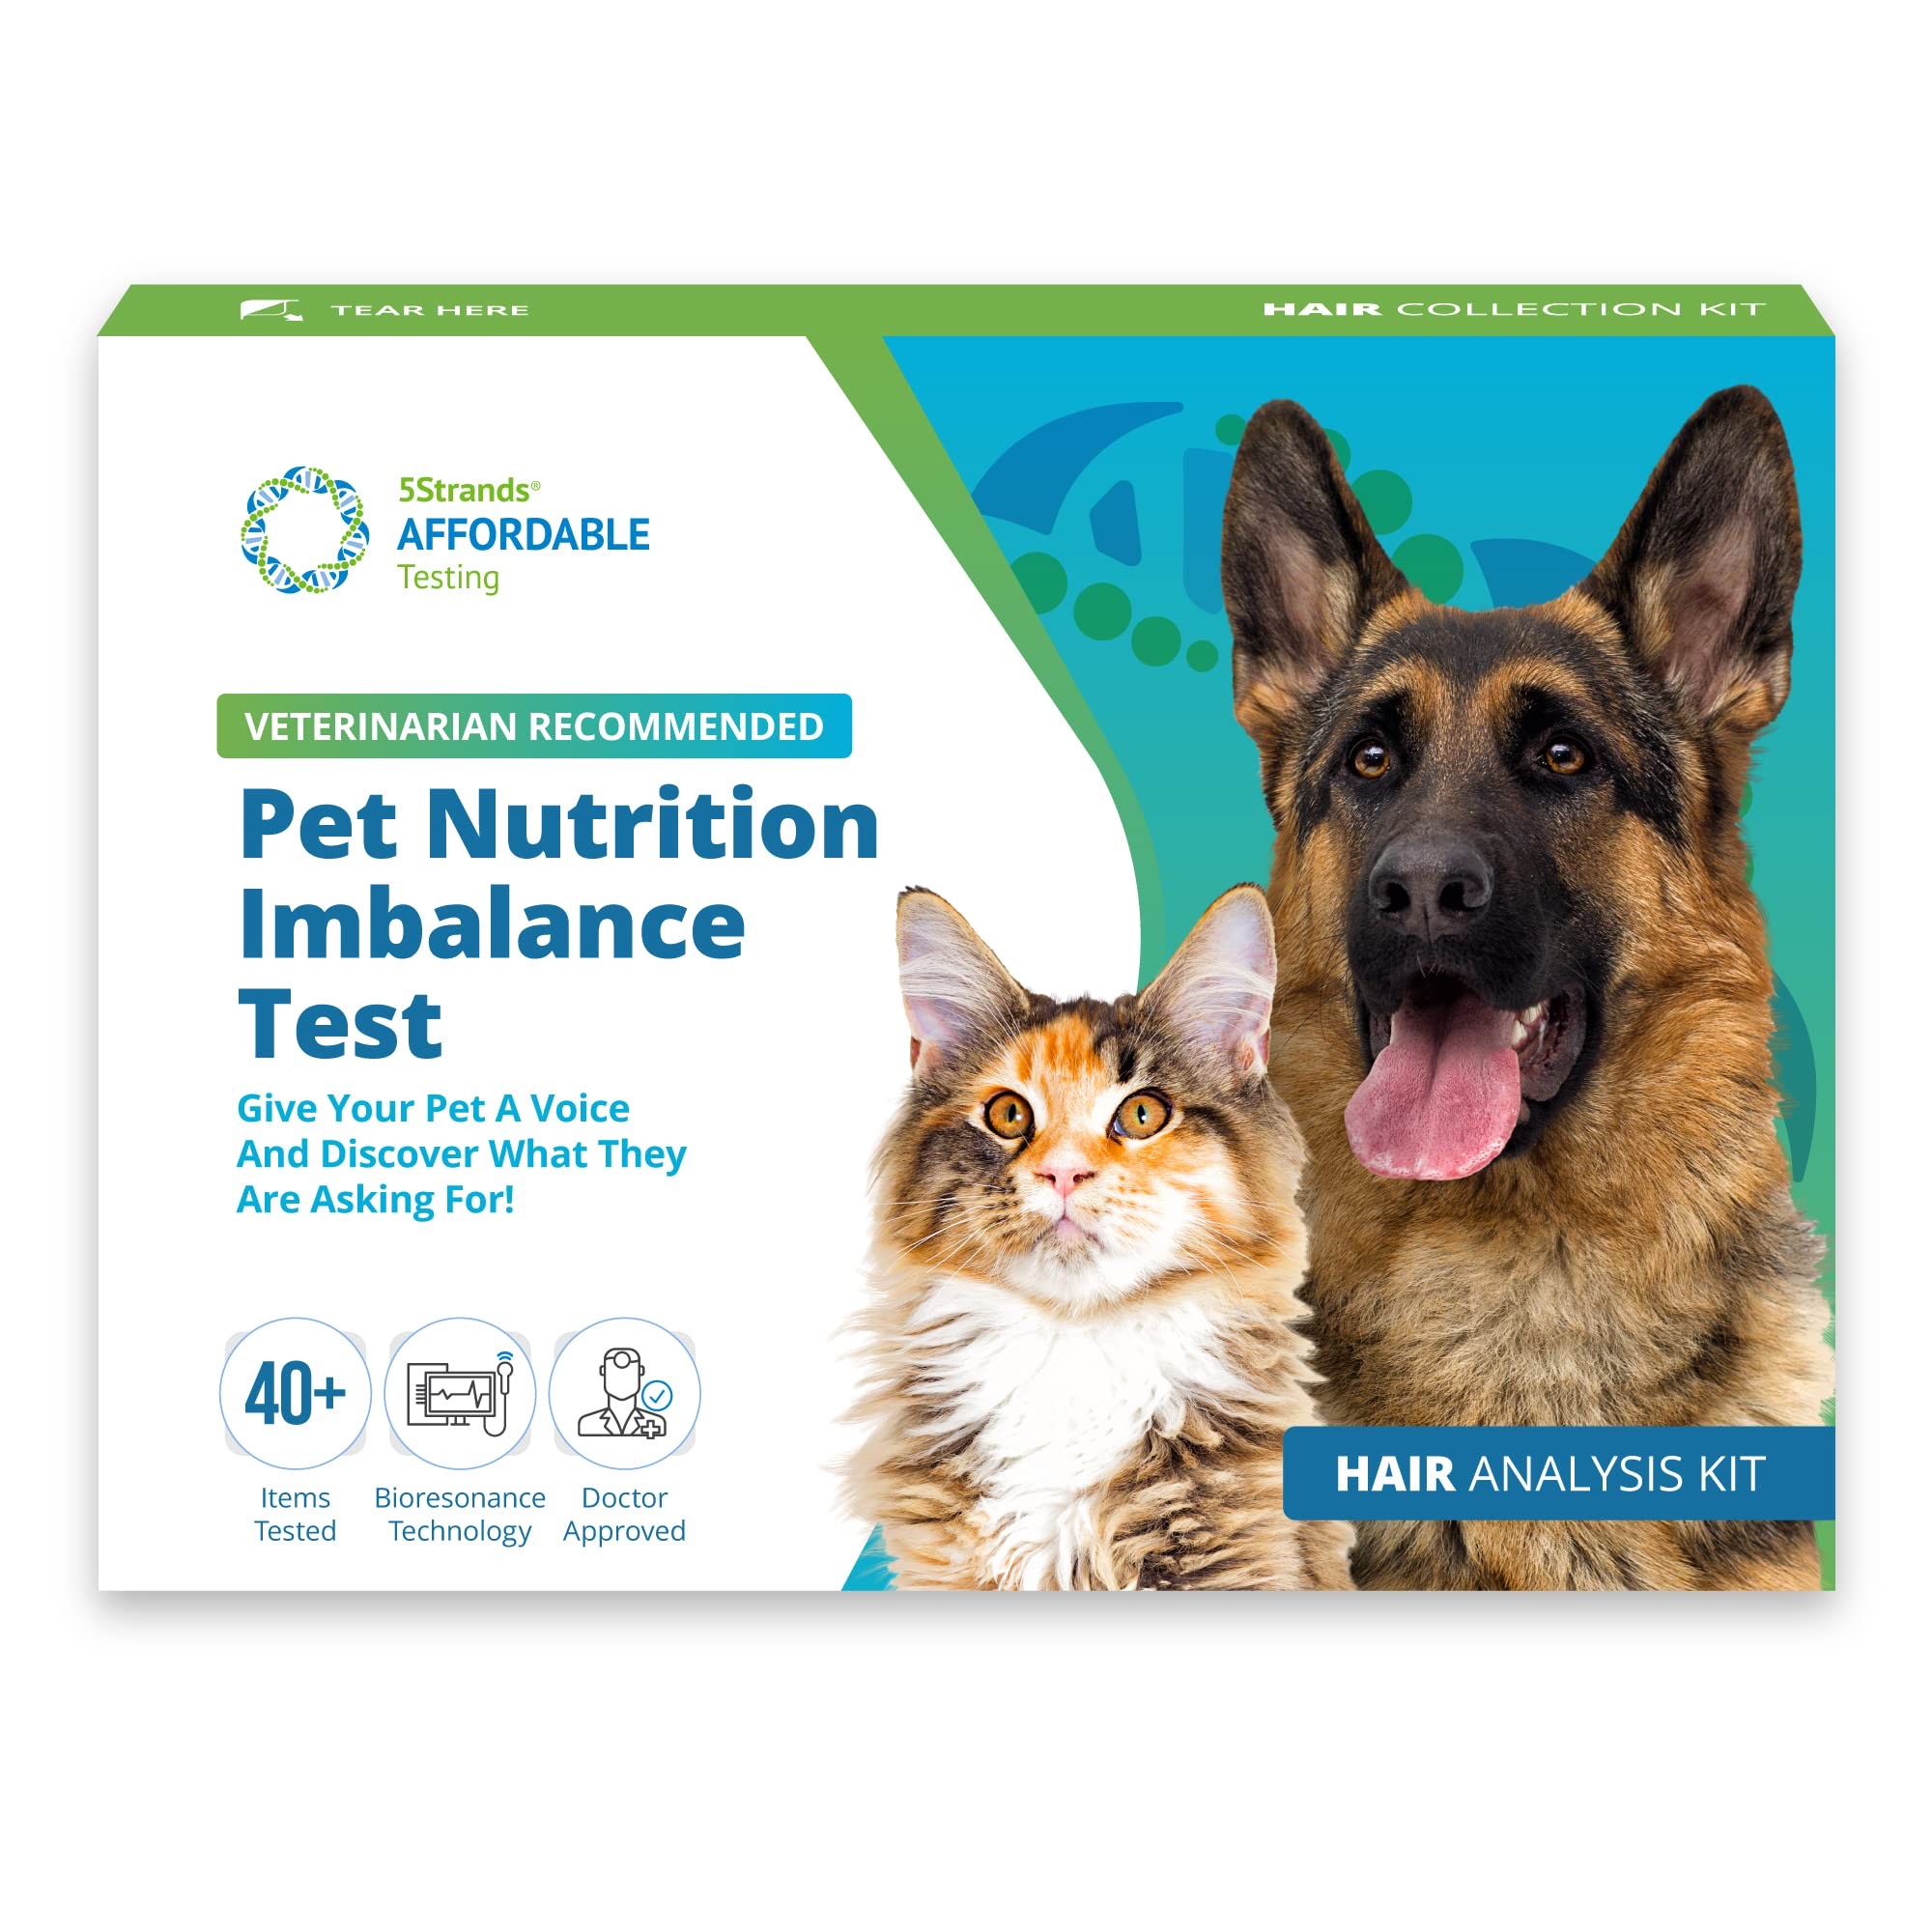 5Strands Pet Nutrition Imbalance Test